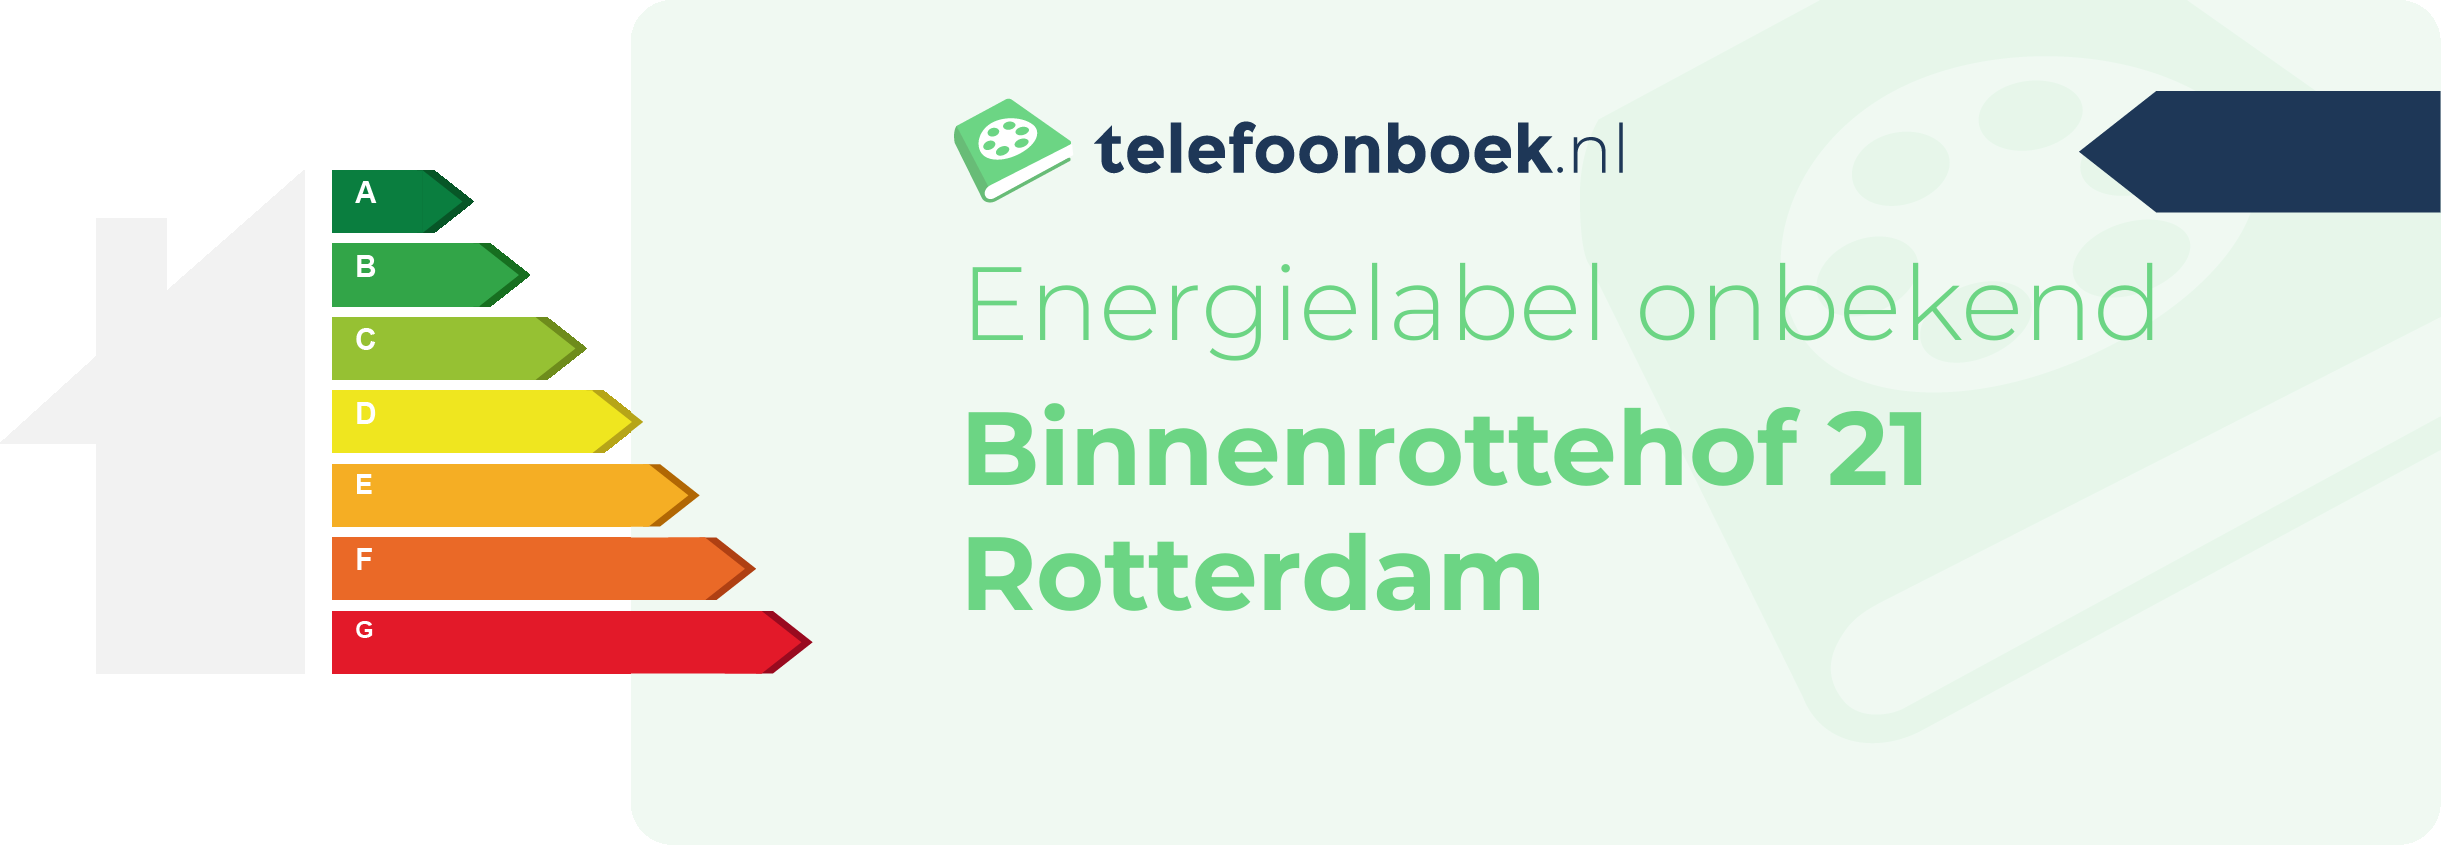 Energielabel Binnenrottehof 21 Rotterdam